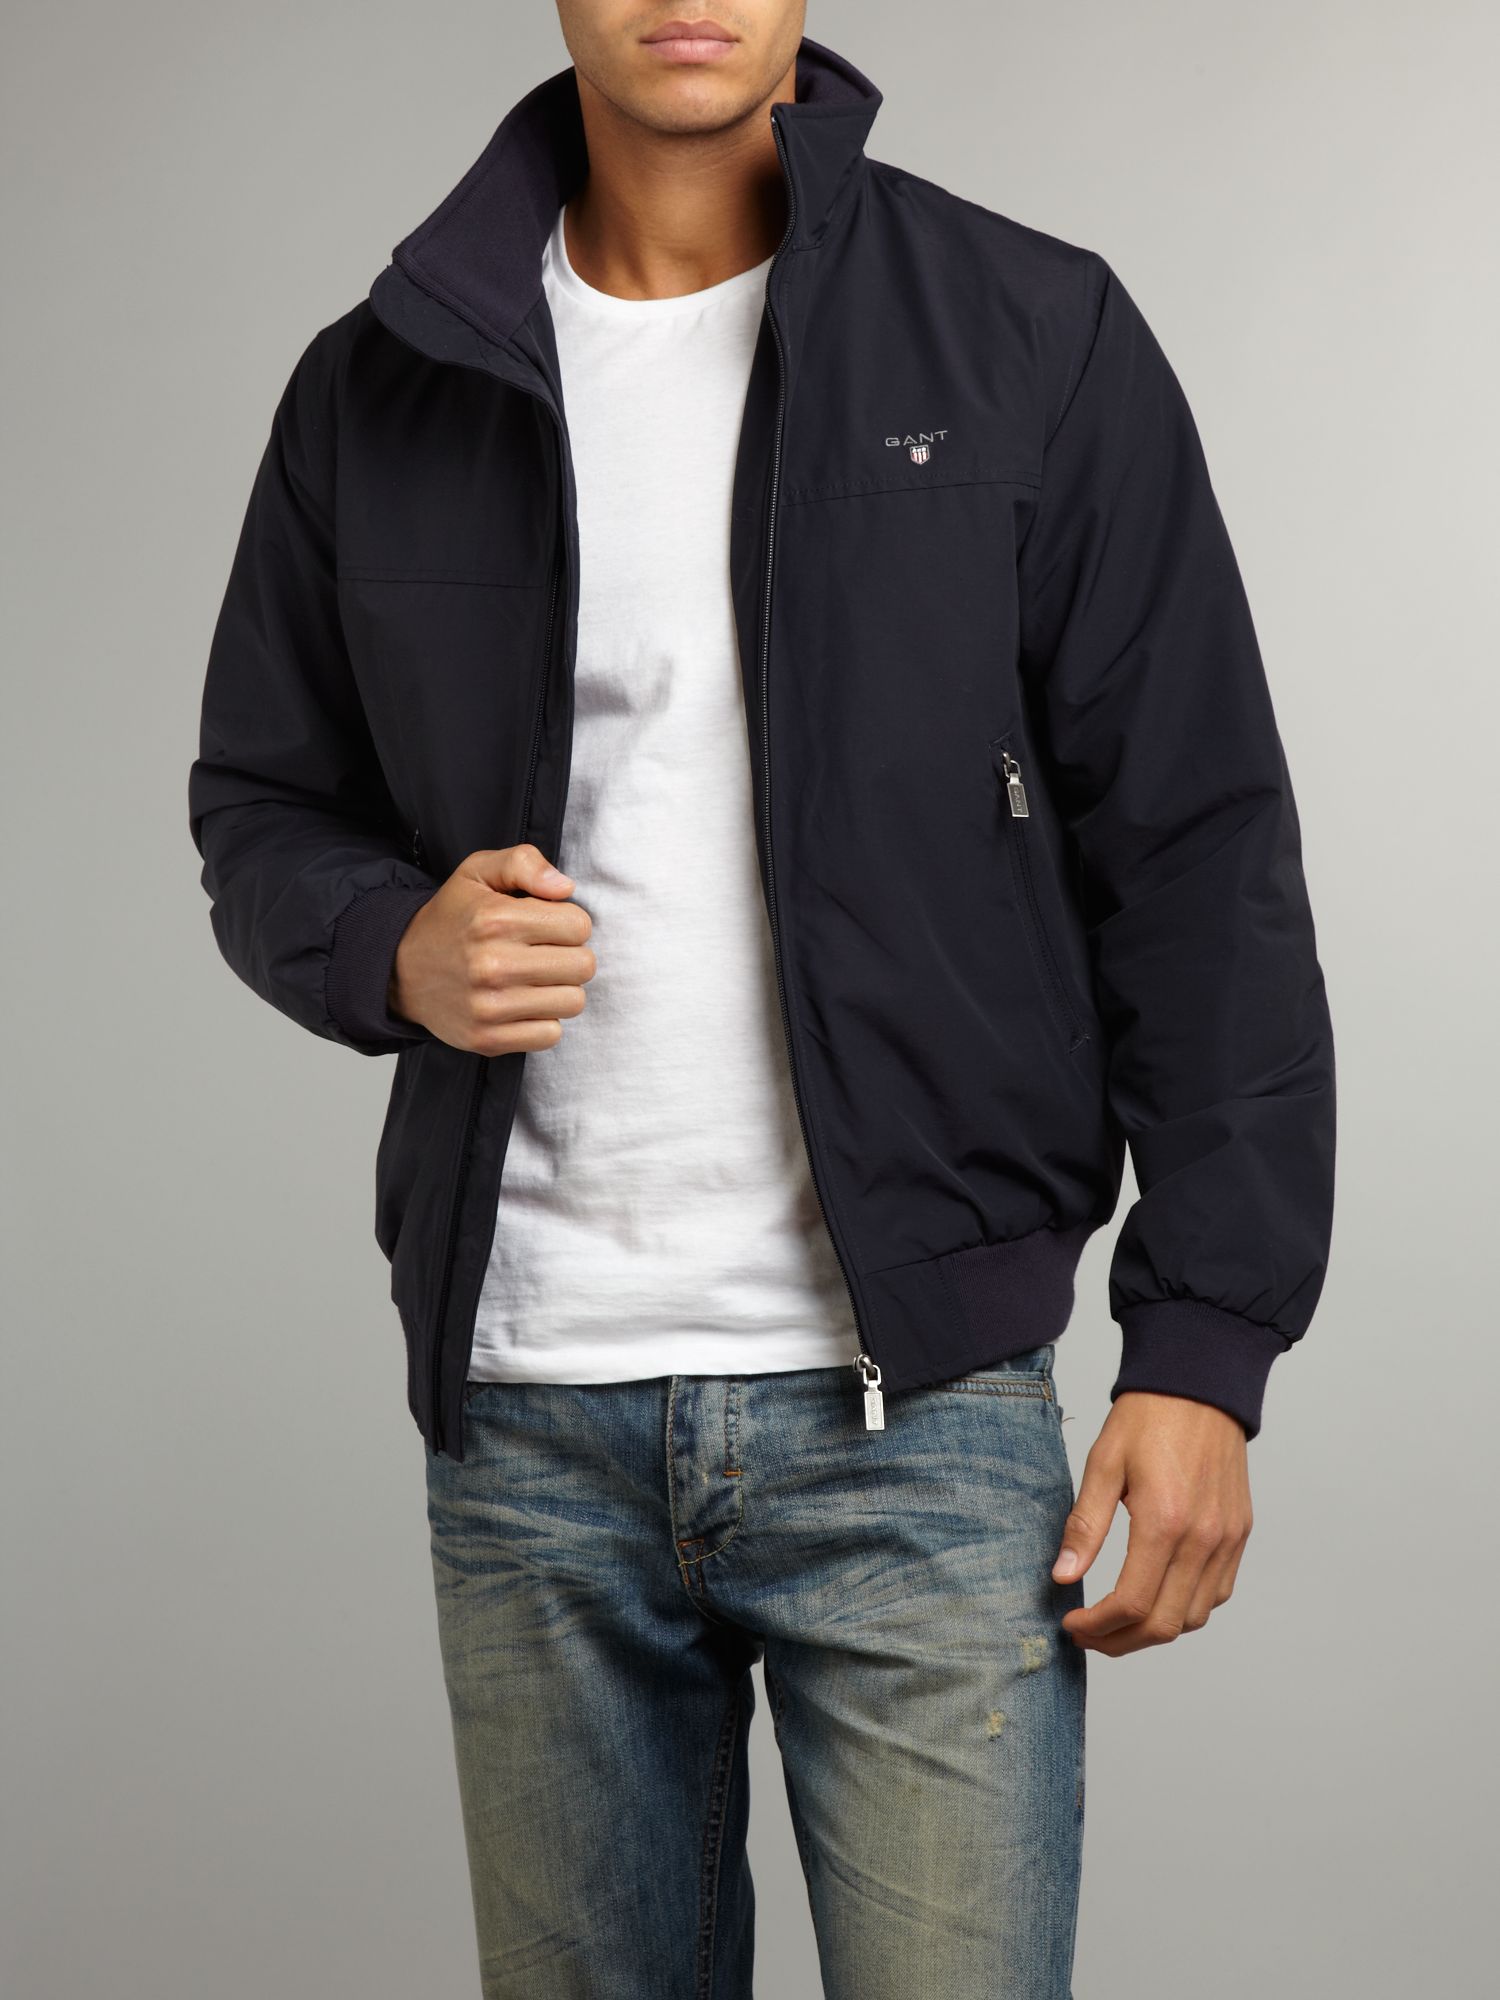 Men's Clothing & Accessories: Gant Men's Coats